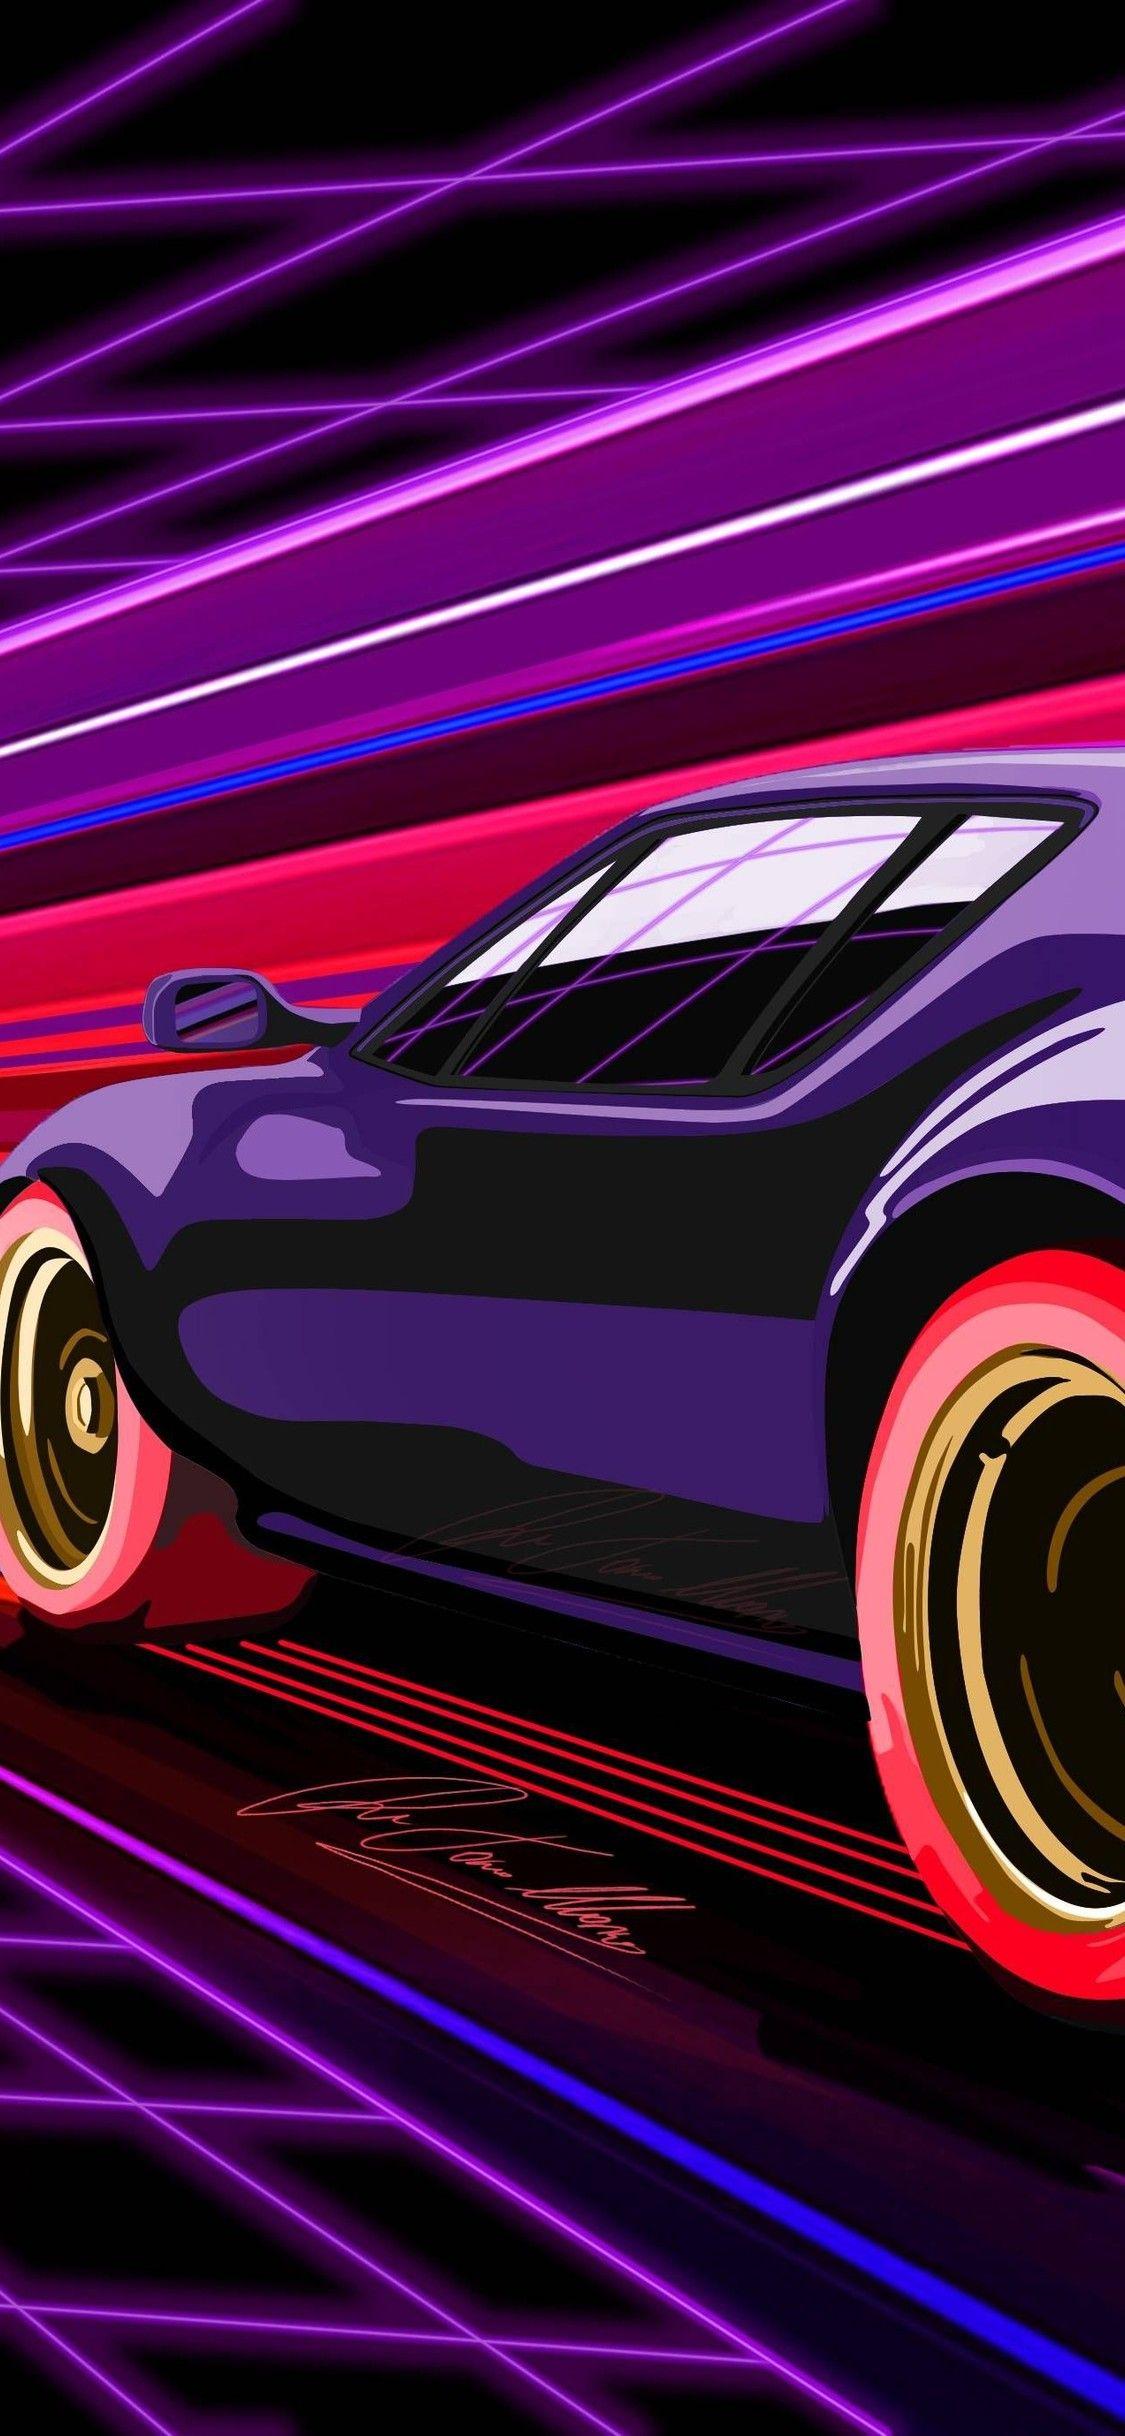 Retro Racing Muscle Car iPhone X. iPhone Wallpaper. Cool